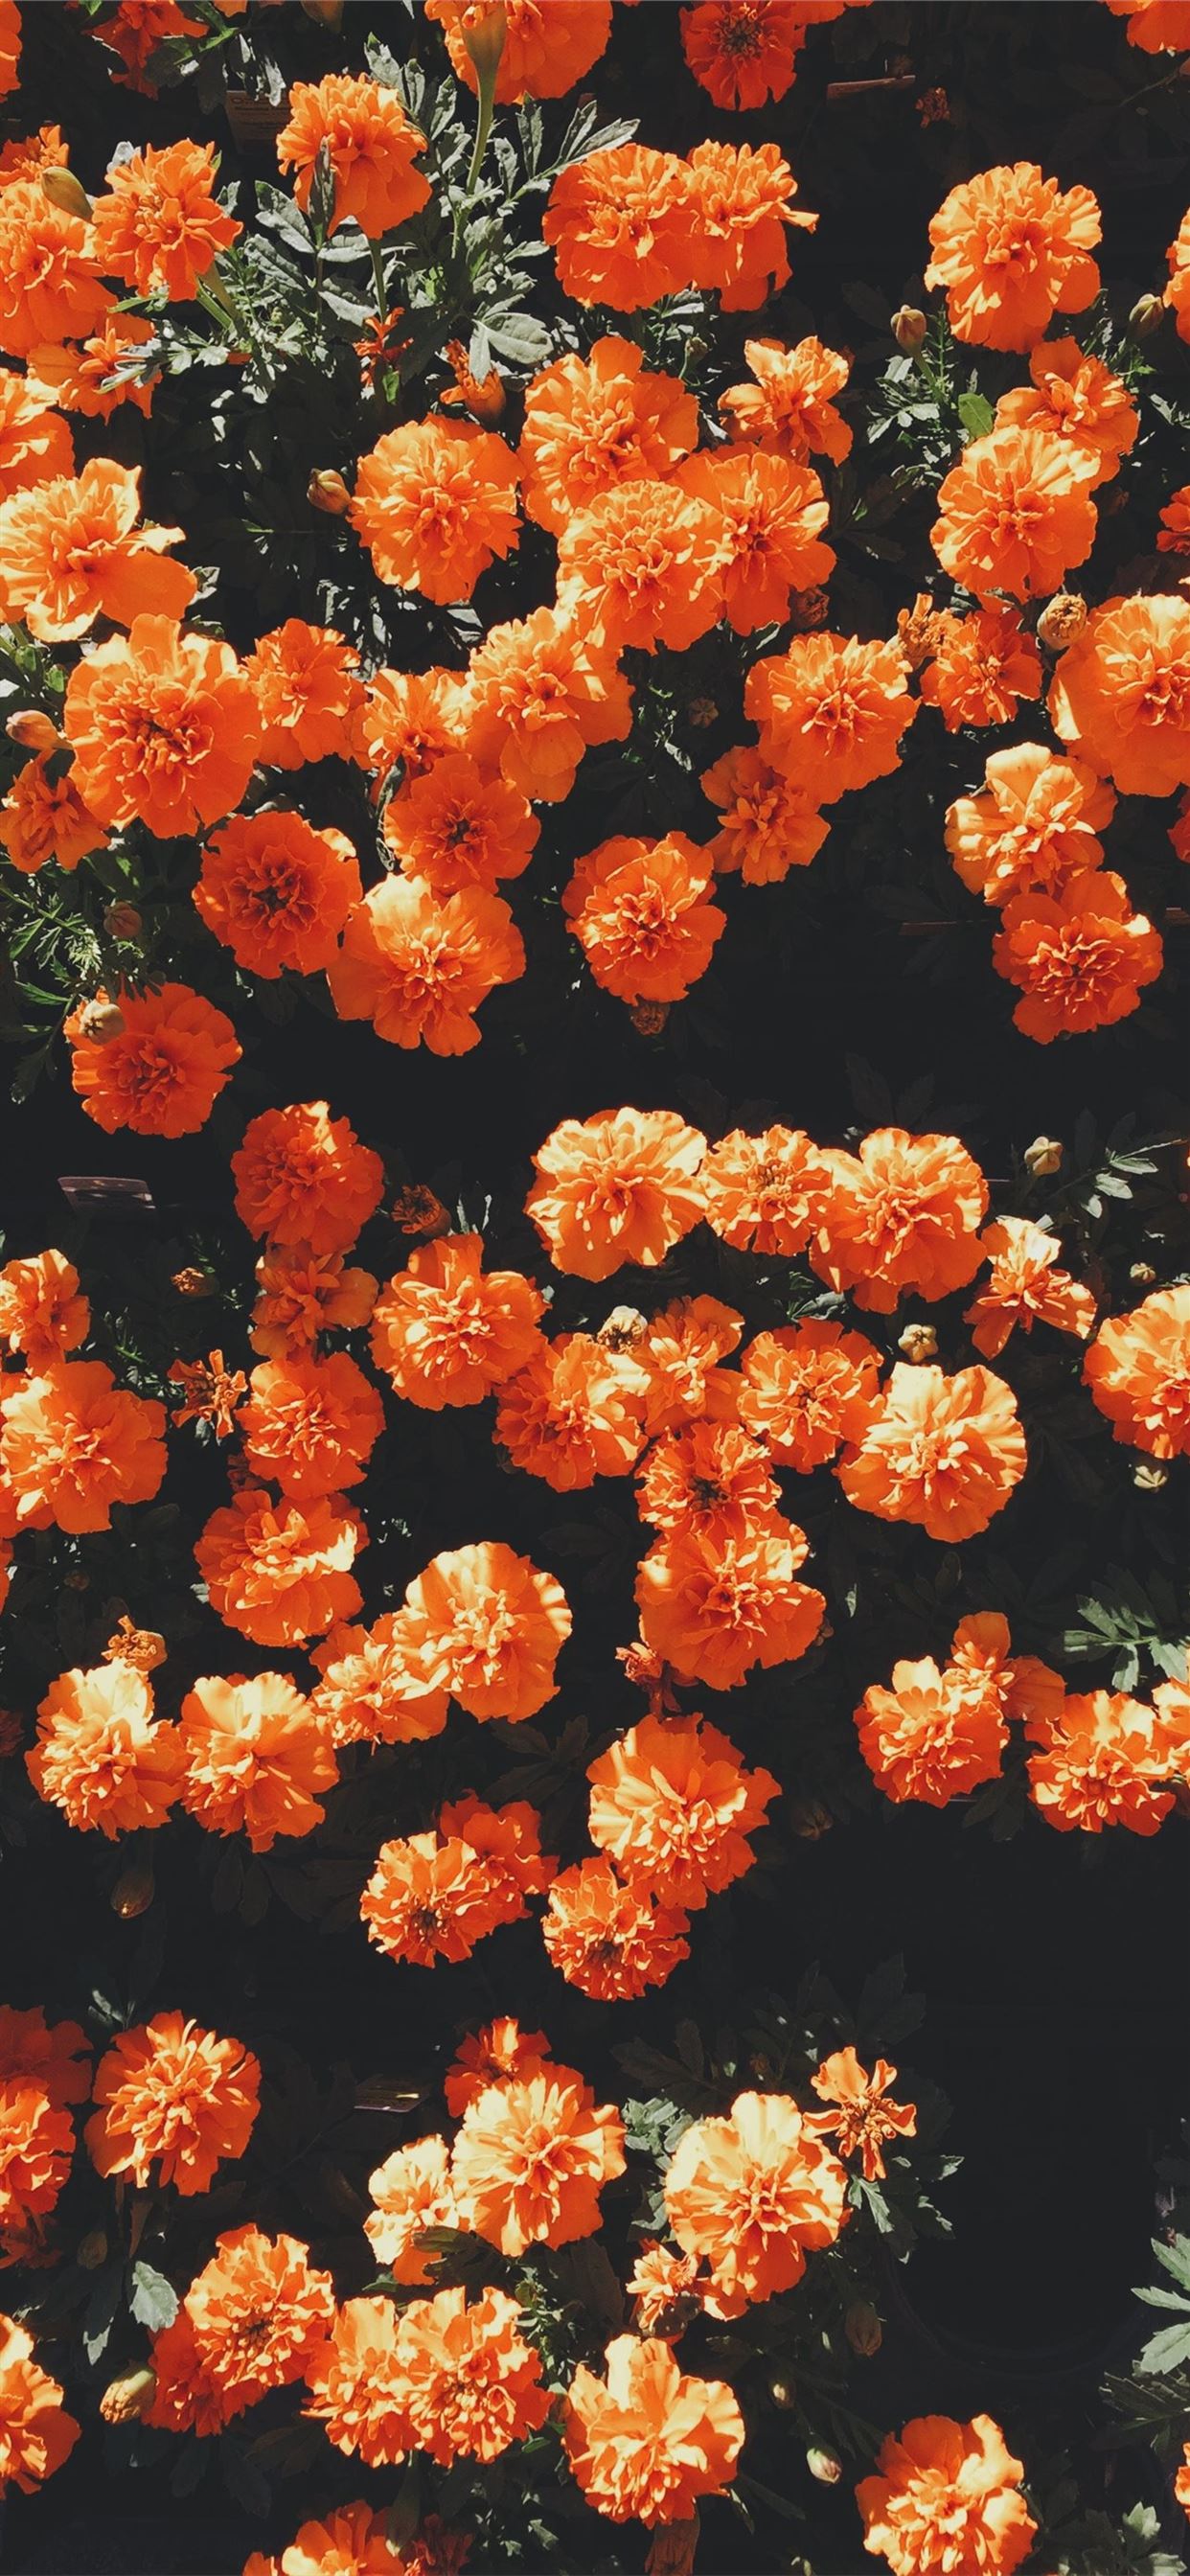 IPhone wallpaper of orange flowers against a black background - Orange